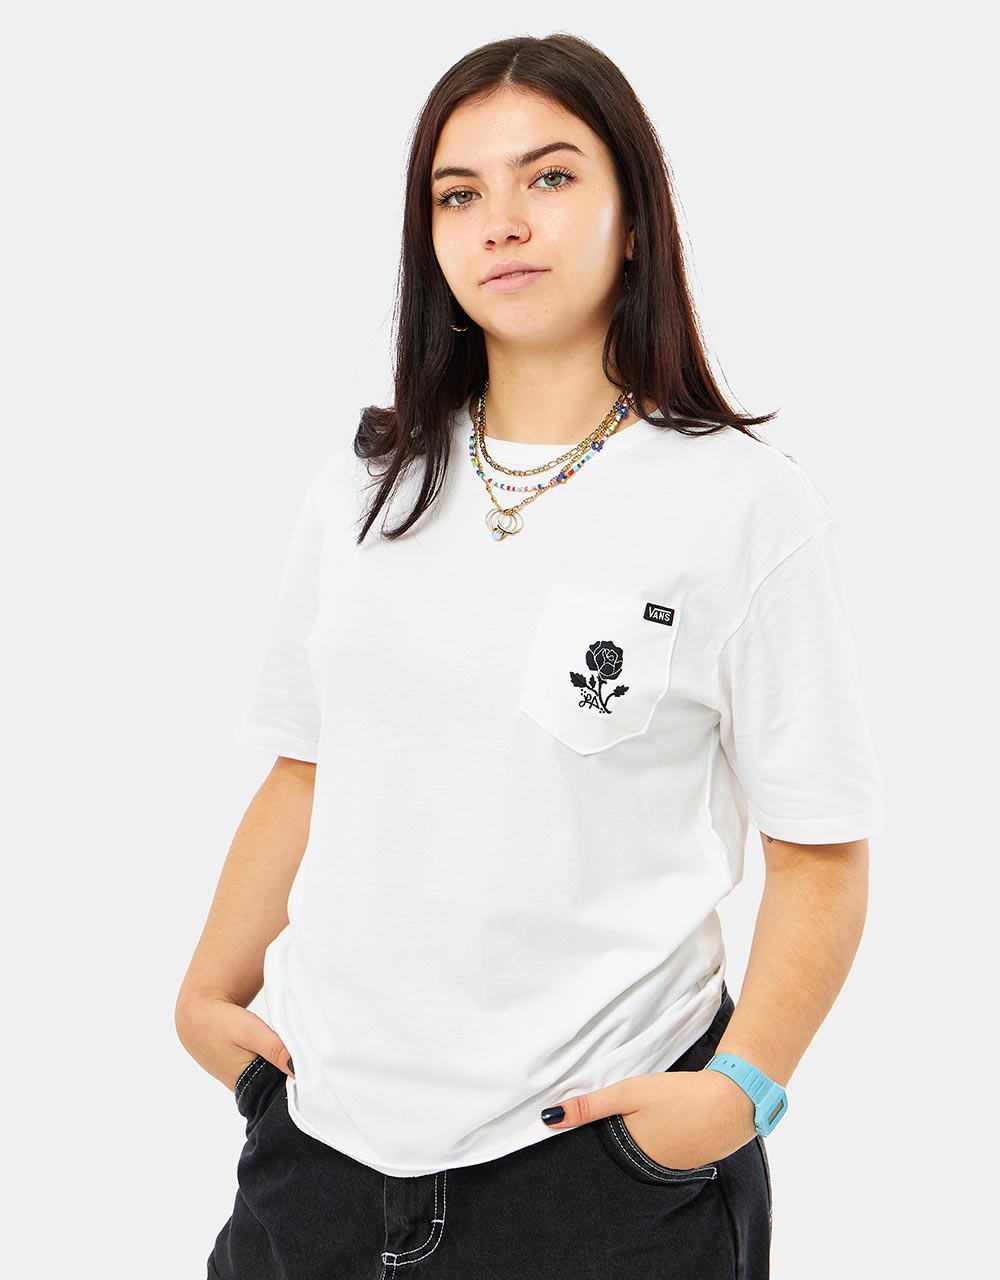 Vans x Lizzie Armanto OTW Womens Pocket T-Shirt - White